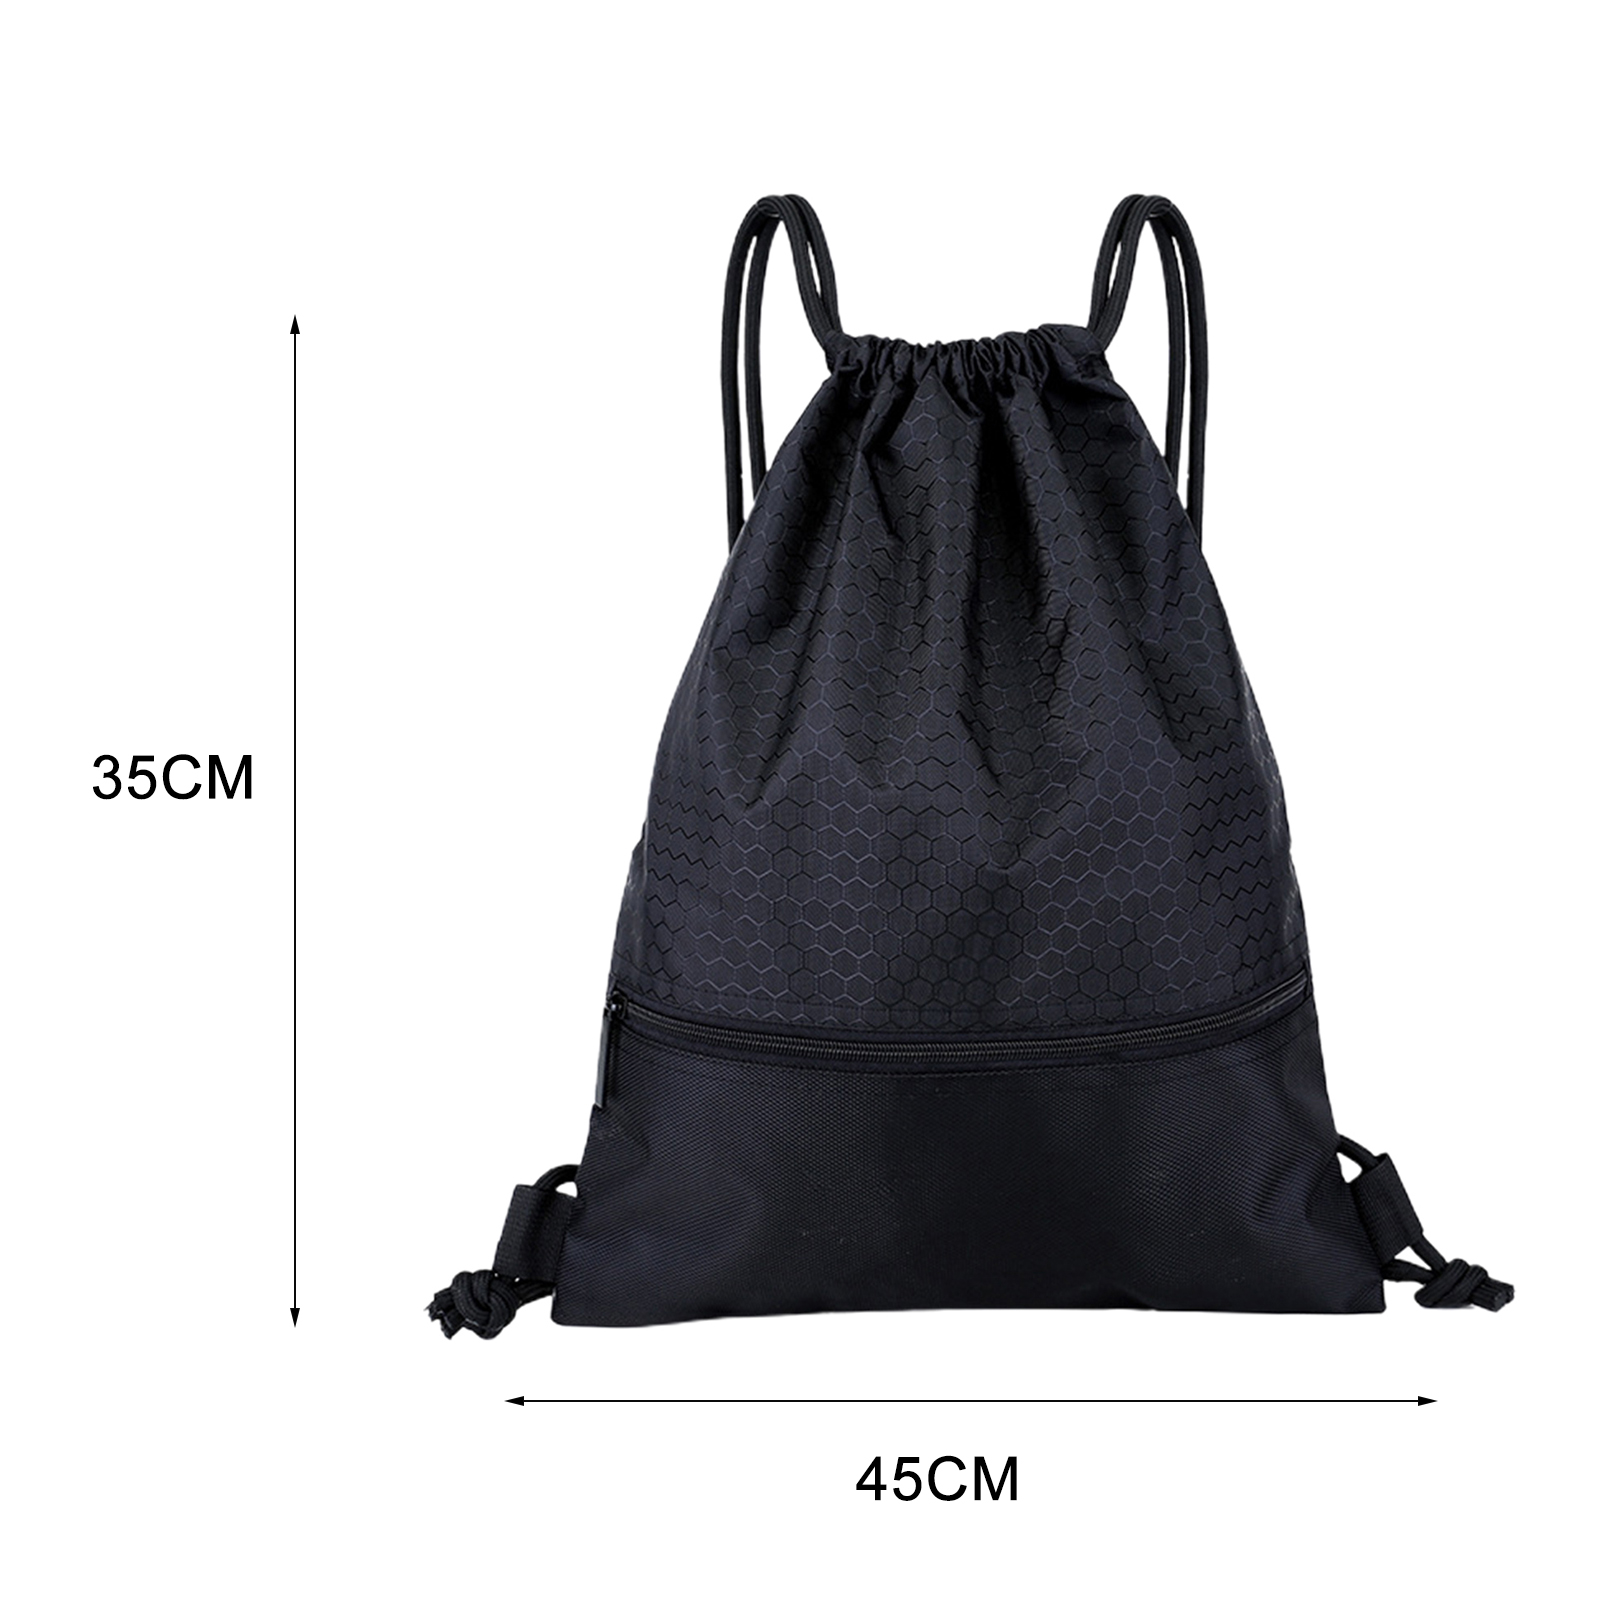 Yesbay Nylon Waterproof Zipper Drawstring Backpack Outdoor Sport Fitness Storage Bag,Red - image 5 of 7